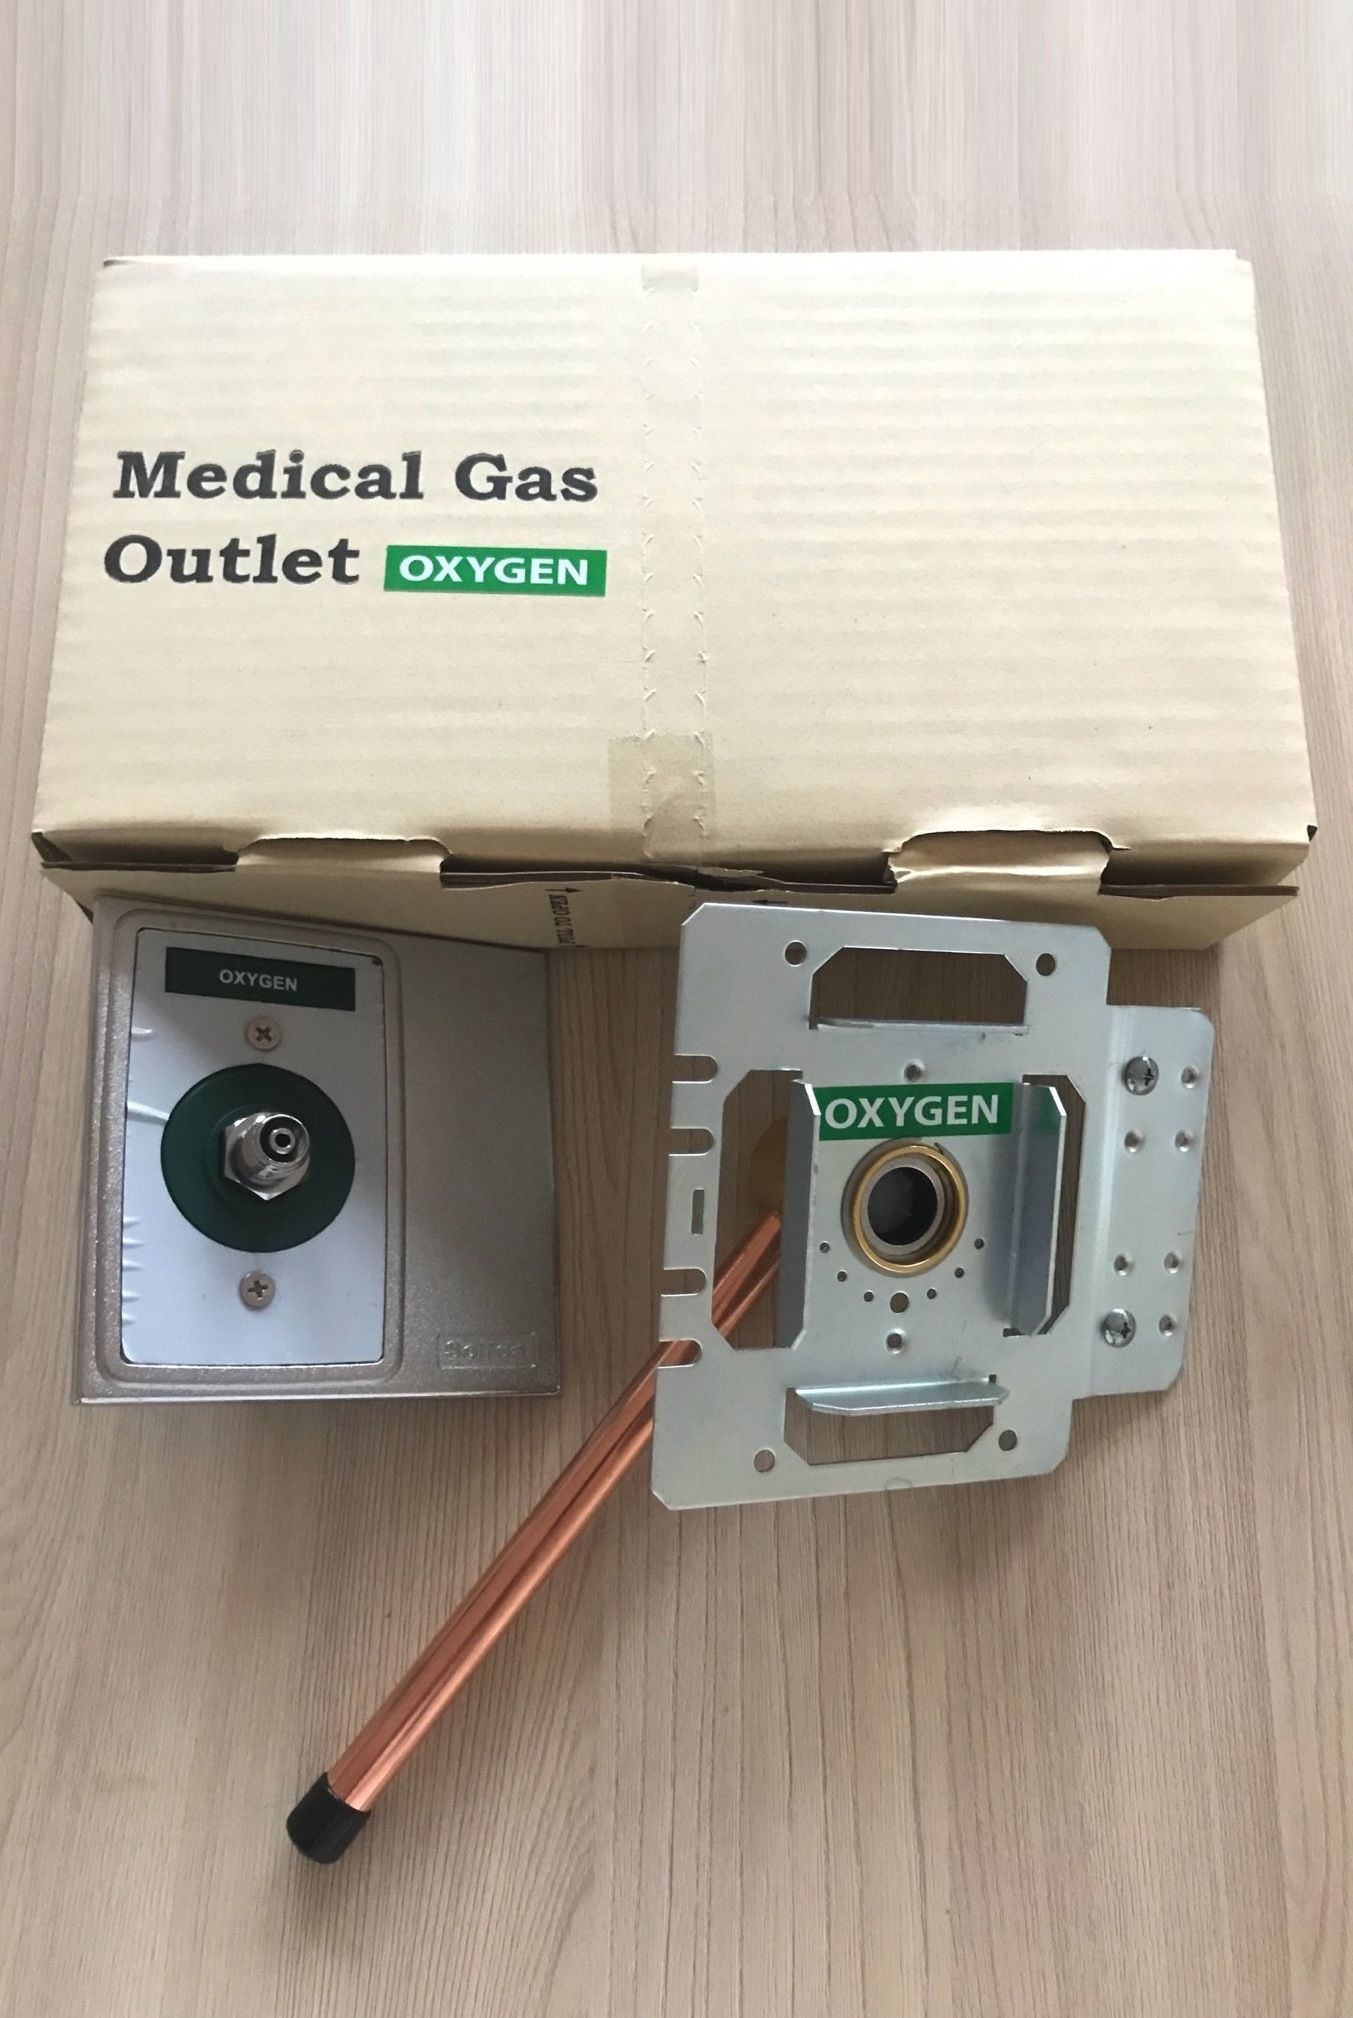 O2 Gas Outlet Oxygen Gas Pipeline  Outlet Diss Connector_ชุดแป้นจ่ายออกซิเจนทางการแพทย์แบบข้อต่อเกลียว Diss